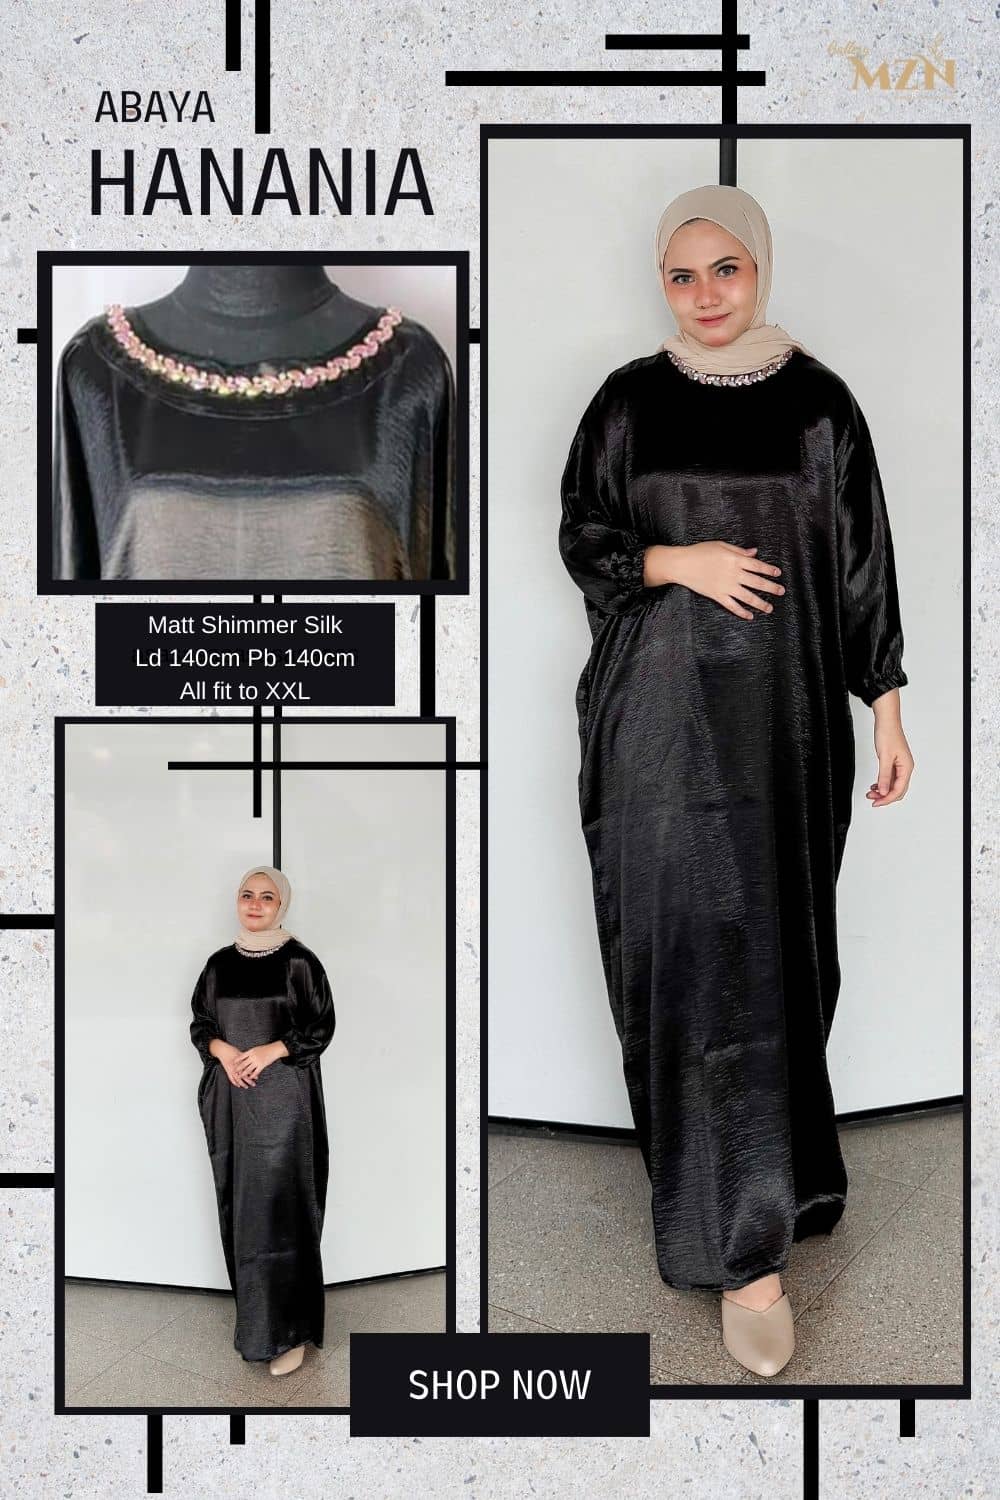 Abaya Hanania Shimmer Silk, Glossy, Metalic Shining Foto Model #8